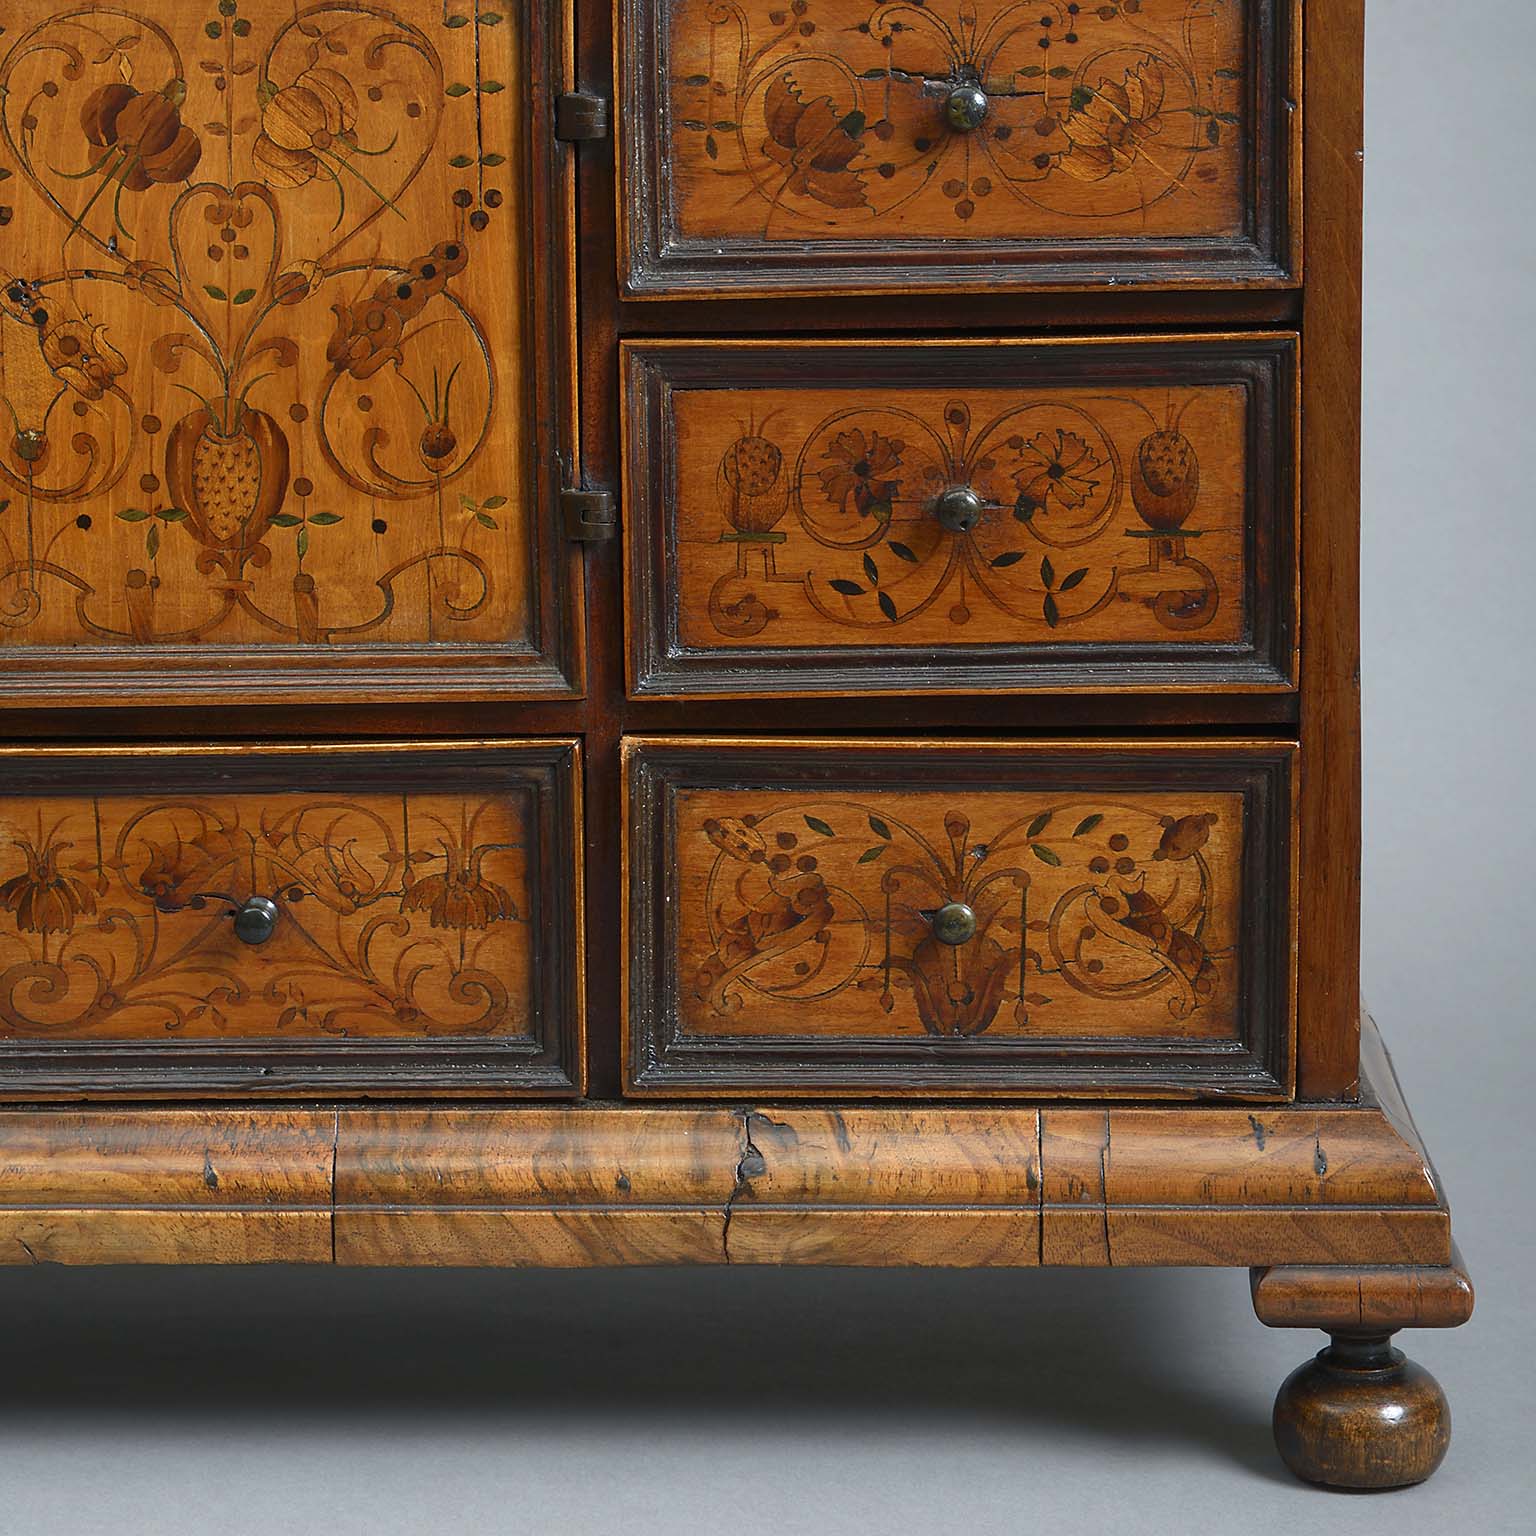 A Queen Anne Burr Walnut Table Cabinet